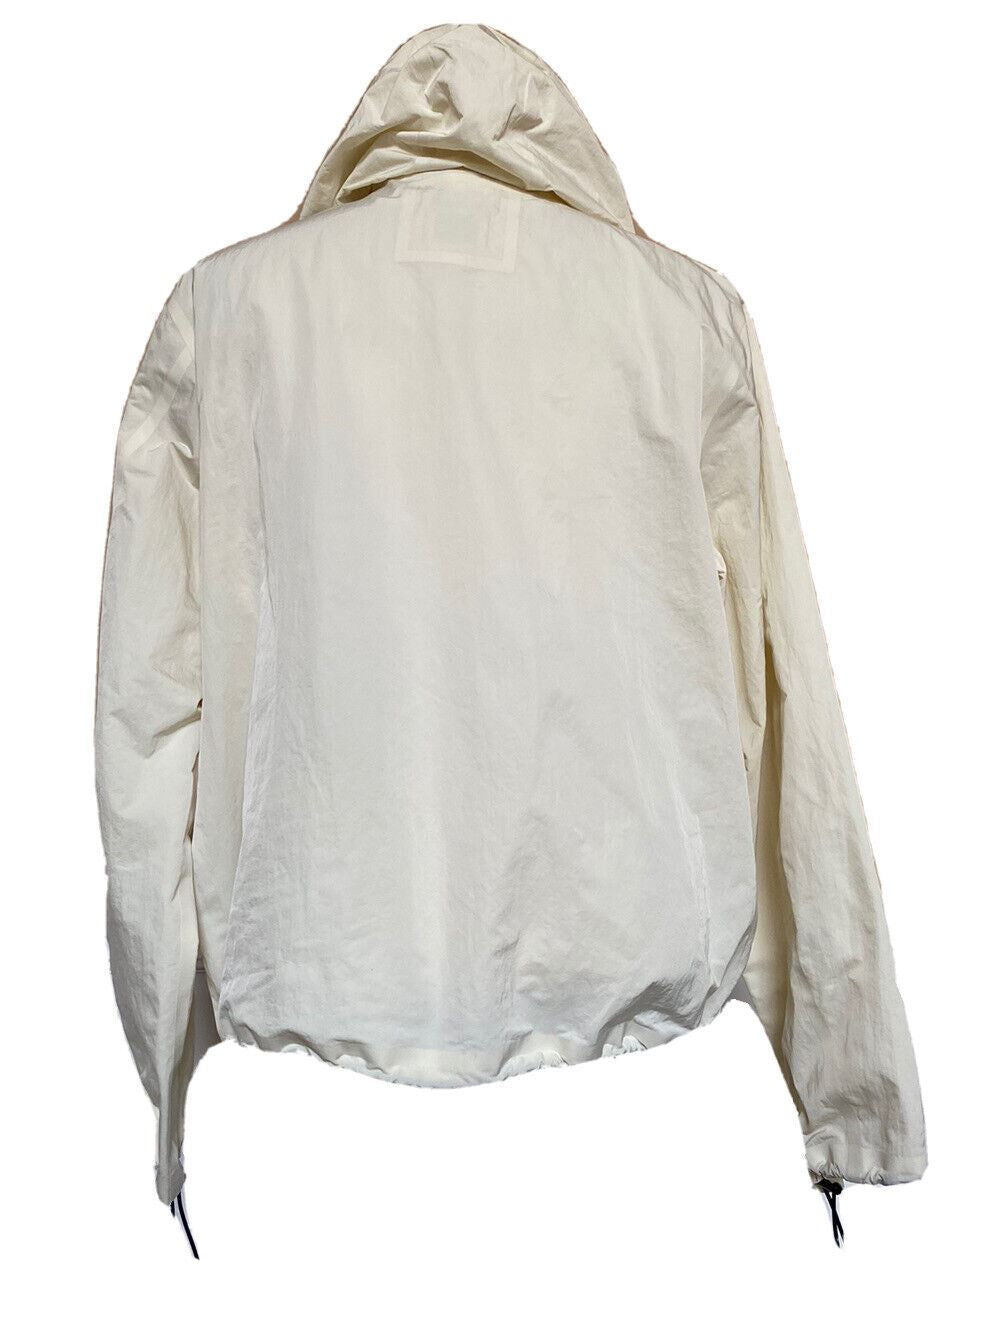 NWT $1850 Bottega Veneta Men's Blouson Tech Nylon Chalk Jacket with Hoodie 42 US